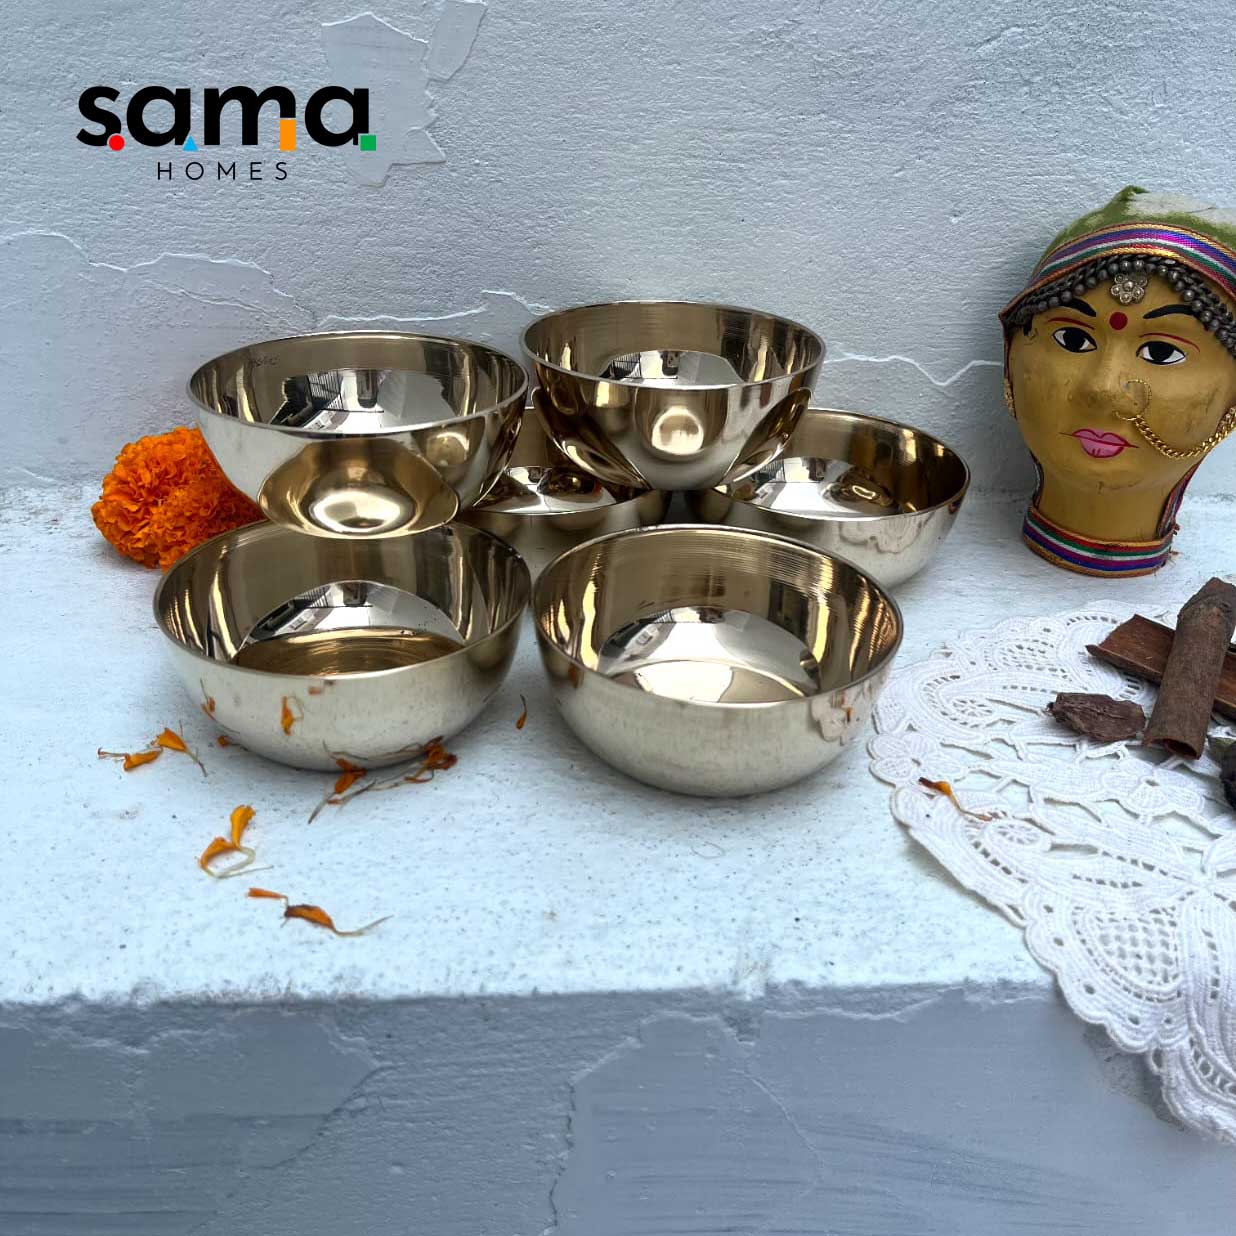 SAMA Homes - bronze kansa bowls or katori